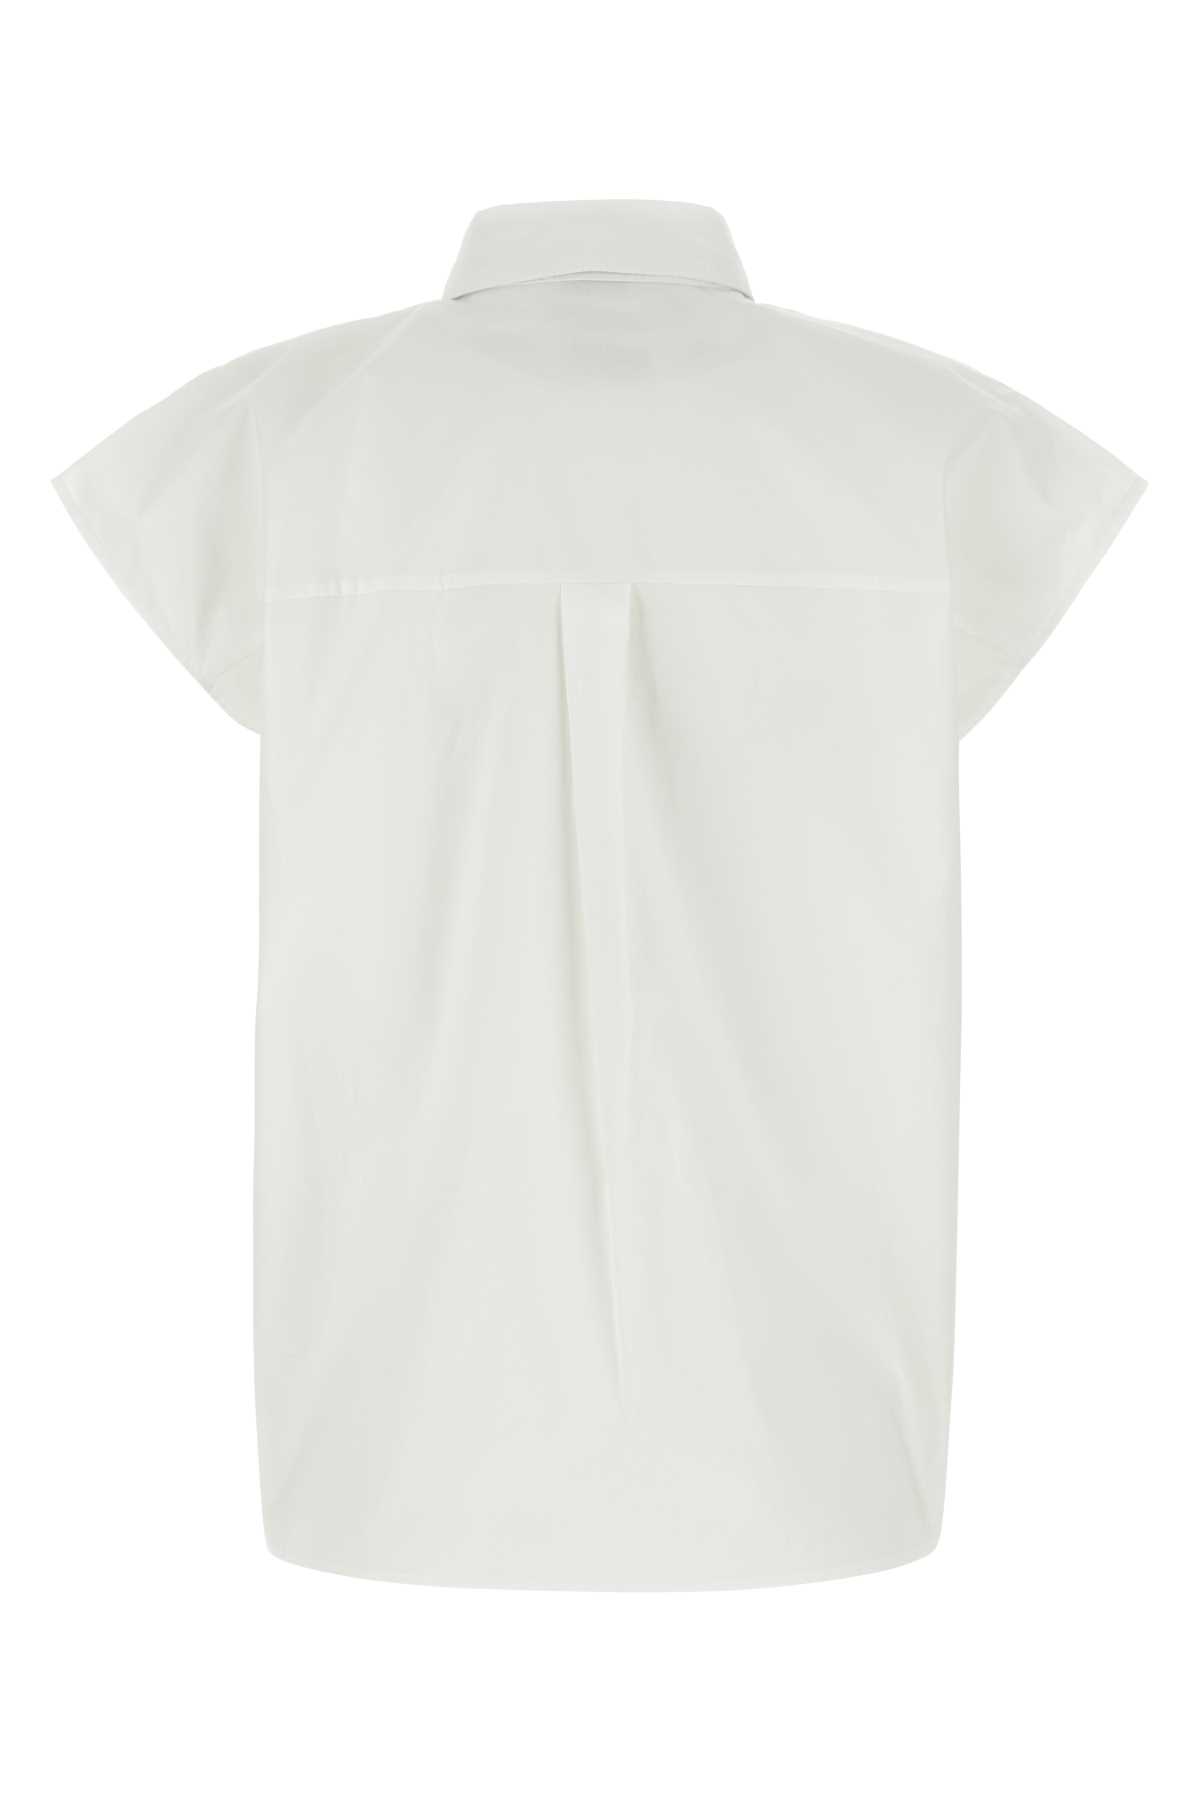 Woolrich White Poplin Shirt In 8041